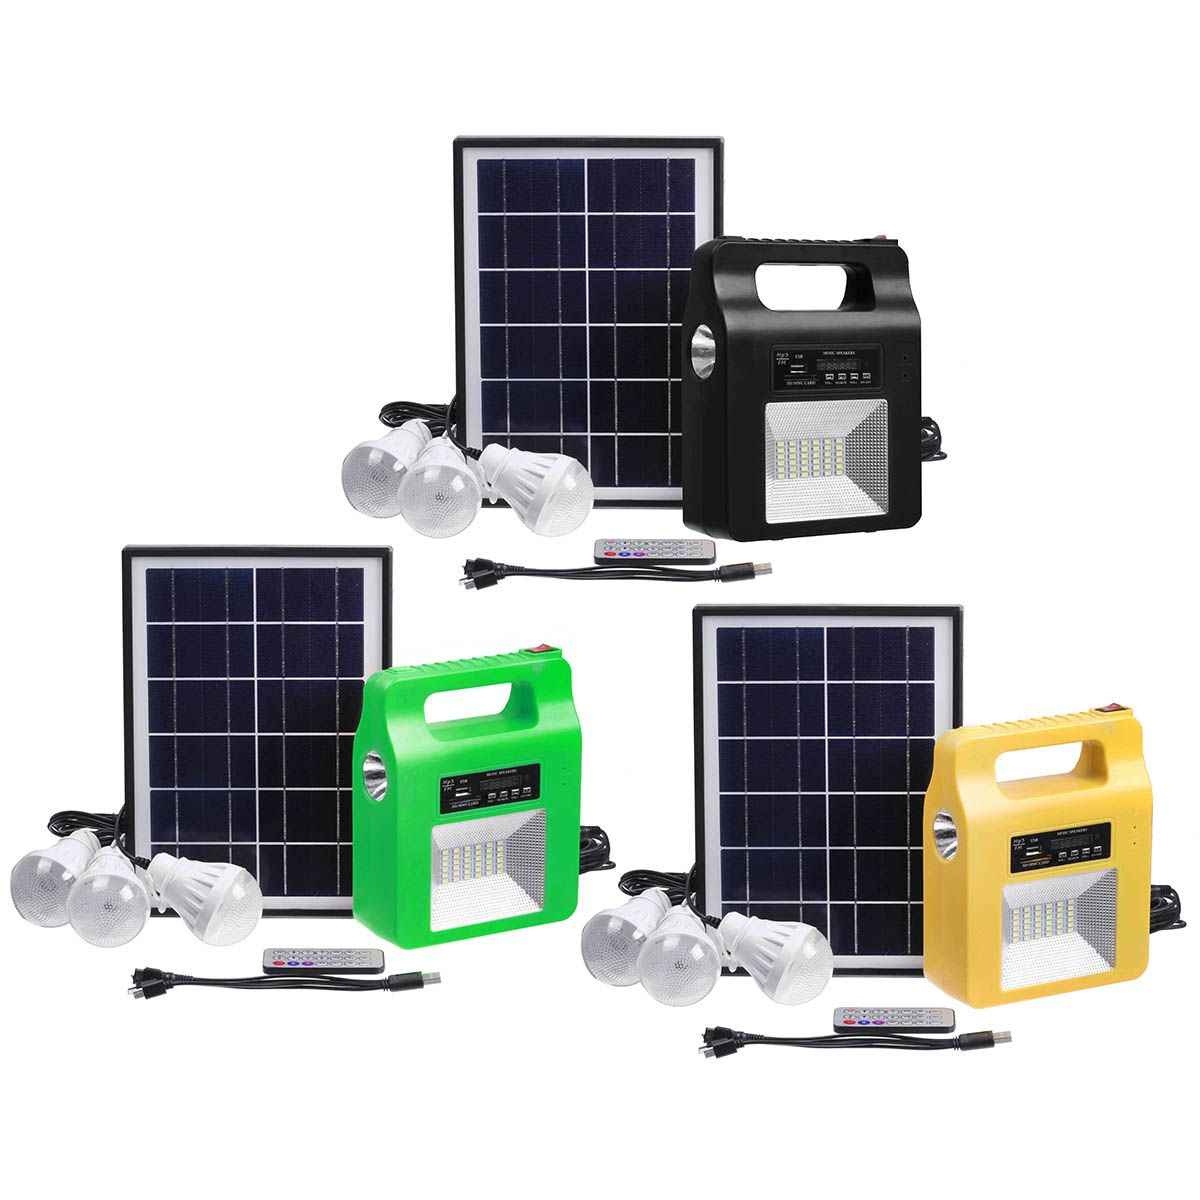 Portable-bluetooth-Solar-Generator-System-Emergency-LED-Light-Bulb-Camping-Radio-PlayerRemote-Contro-1753885